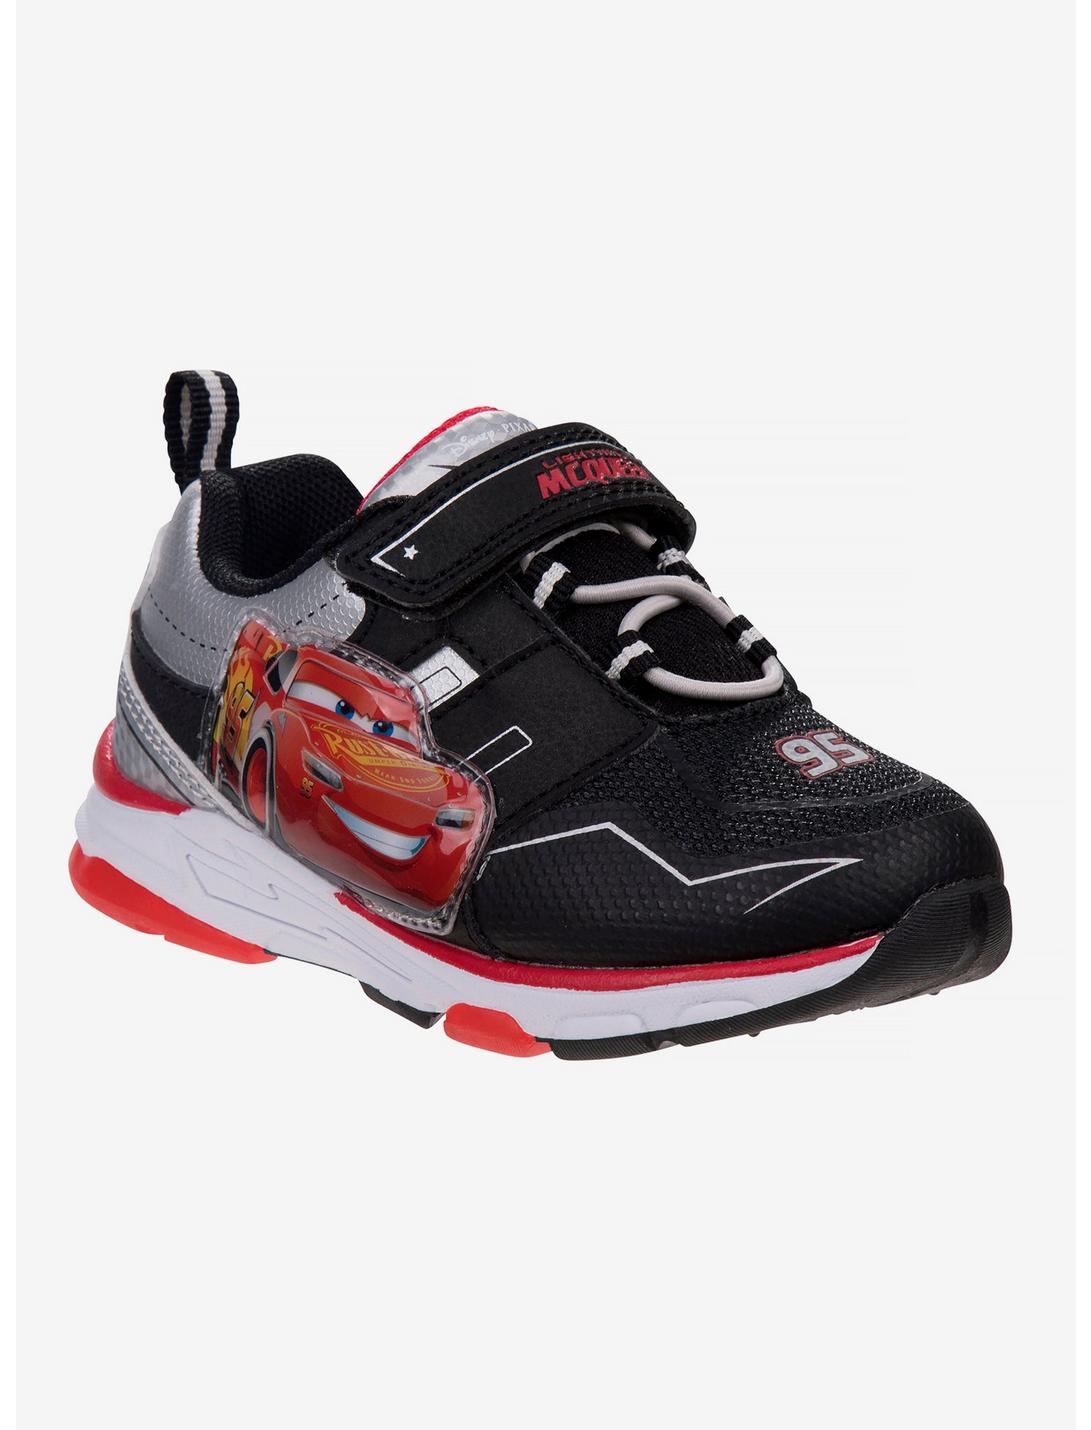 Disney Pixar Cars Boys Red Lights Sneakers, BLACK, hi-res